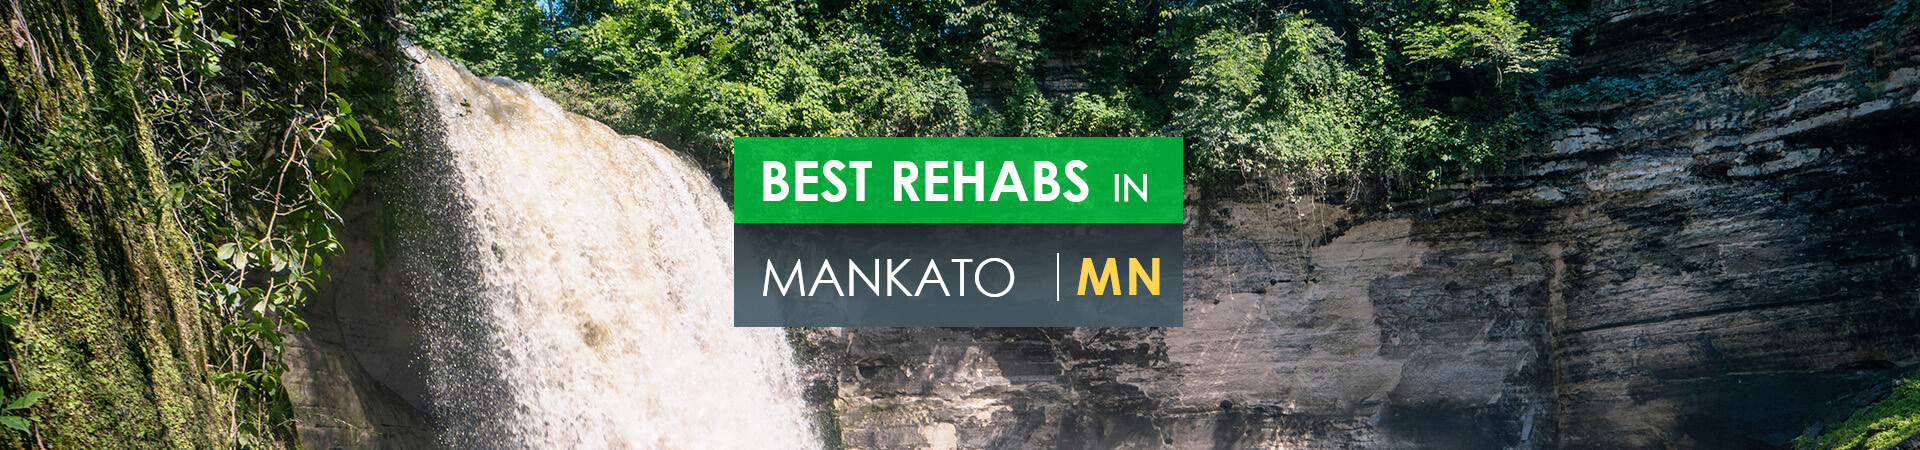 Best rehabs in Mankato, MN